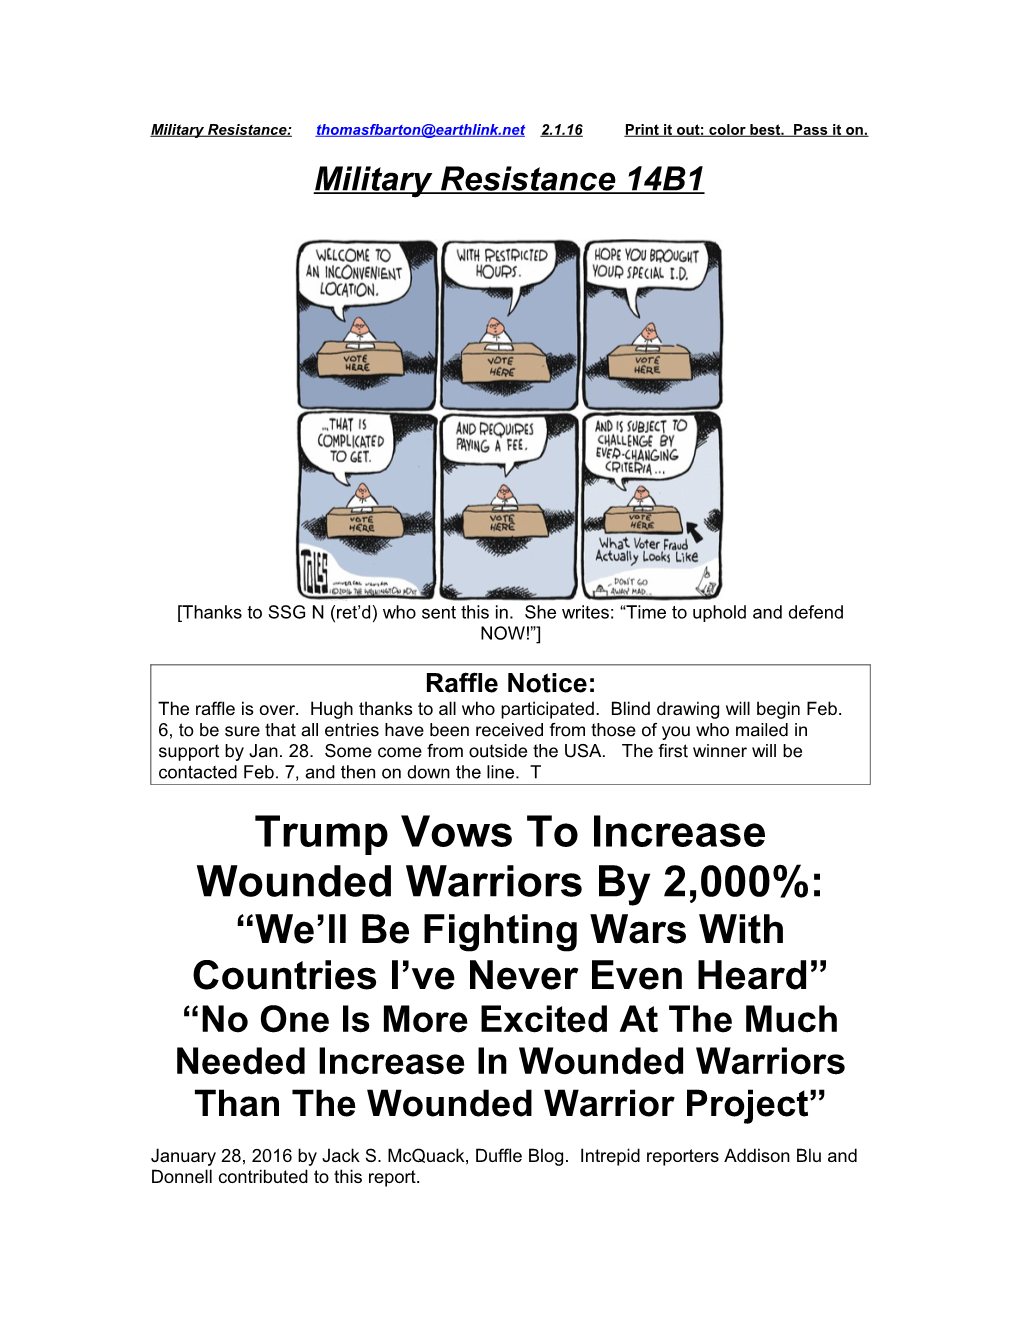 Military Resistance 14B1